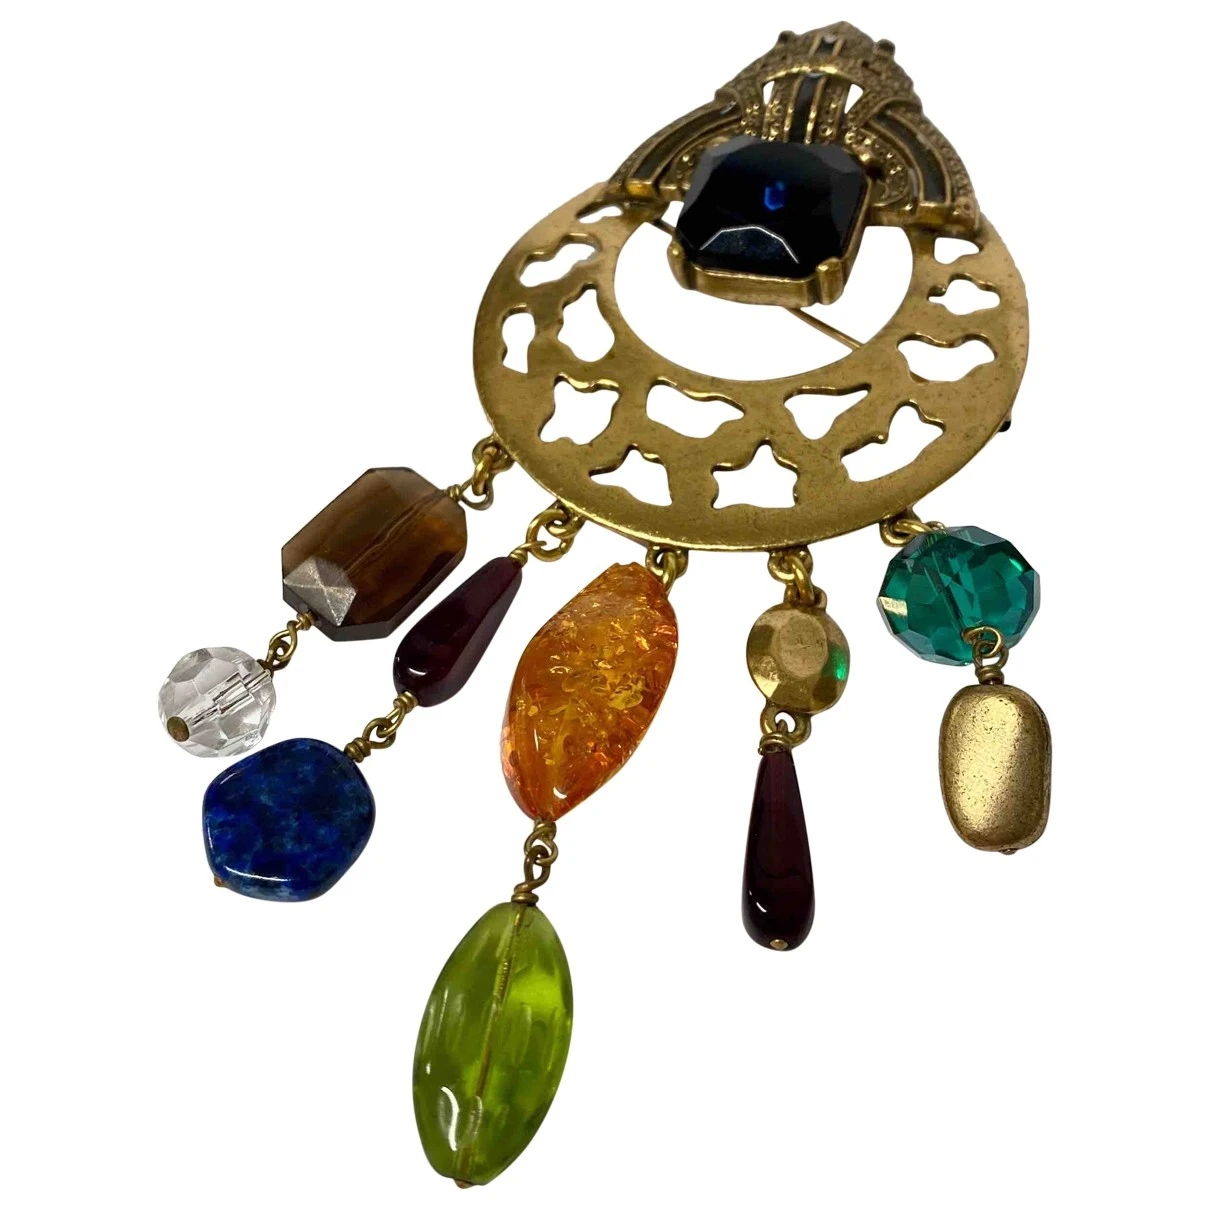 jewellery Oscar De La Renta pins & brooches for Female Metal. Used condition